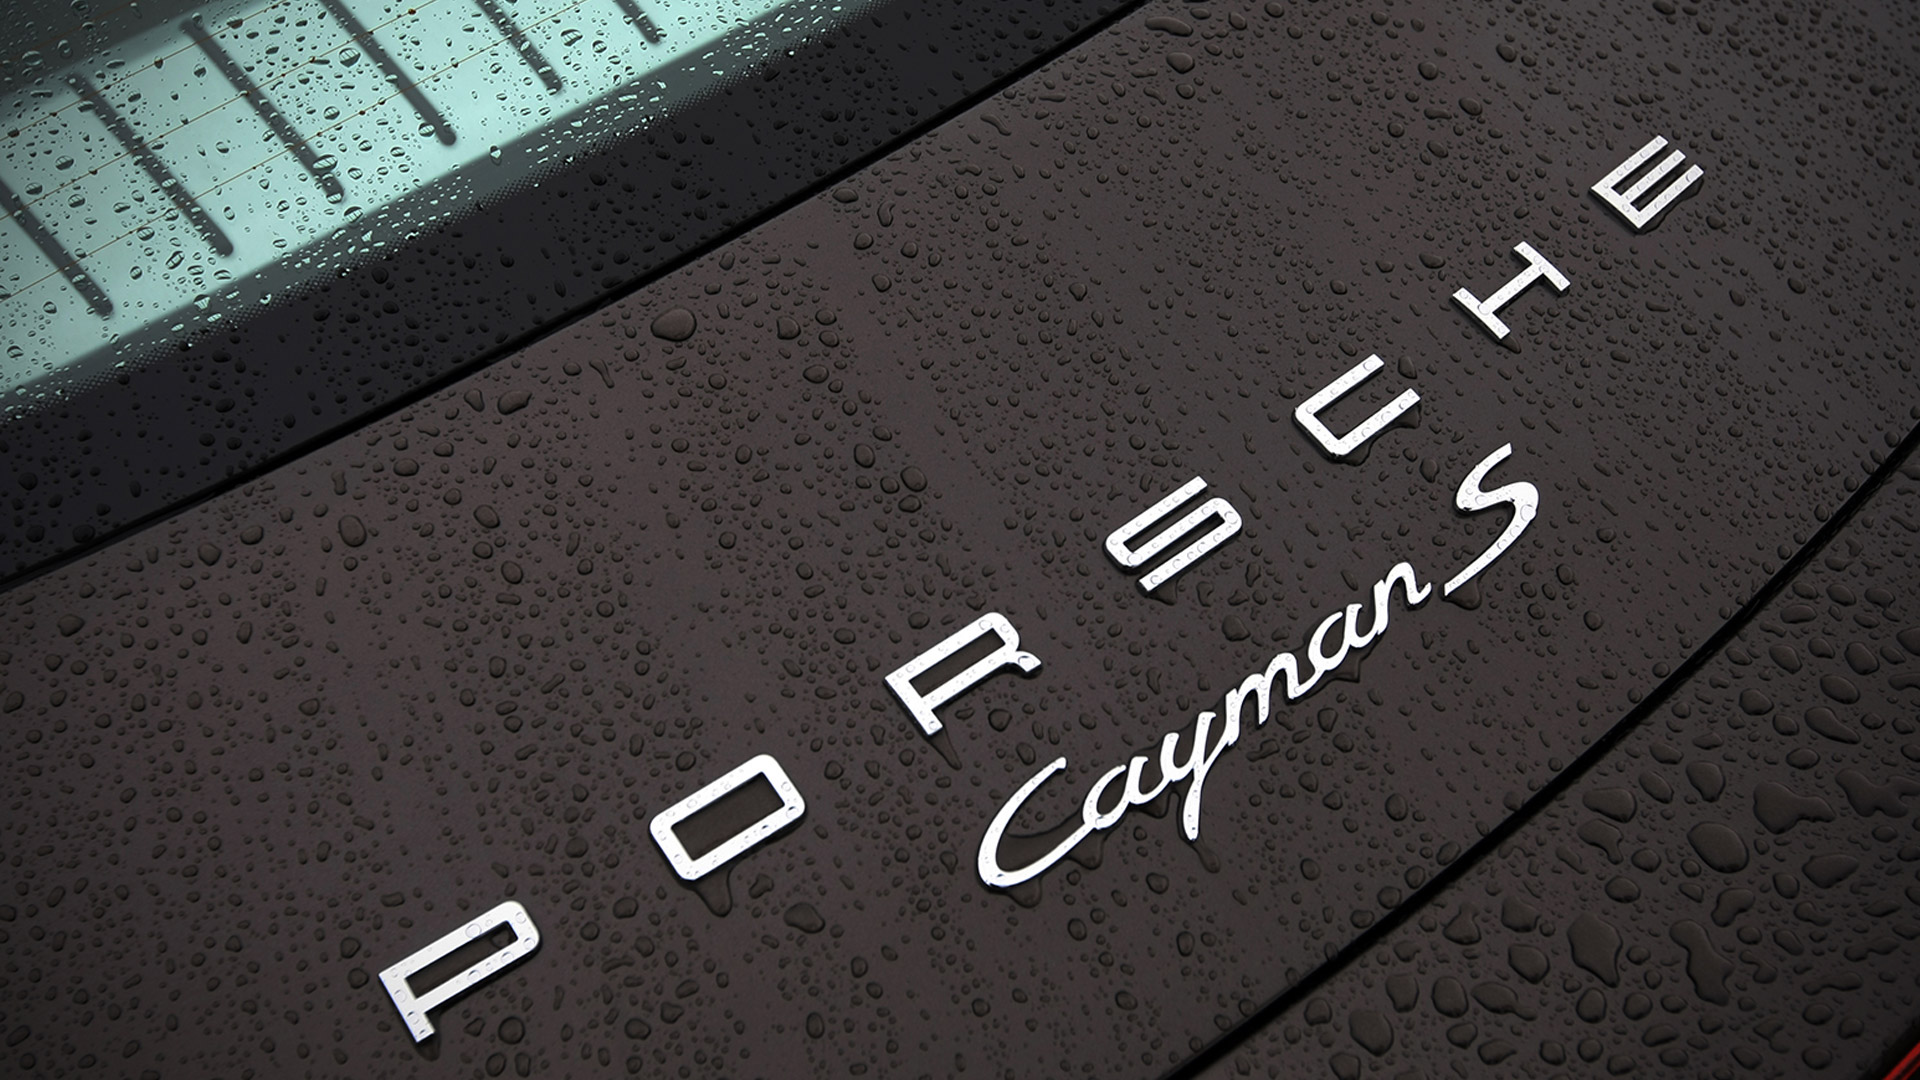 Porsche Cayman 2015 S Exterior